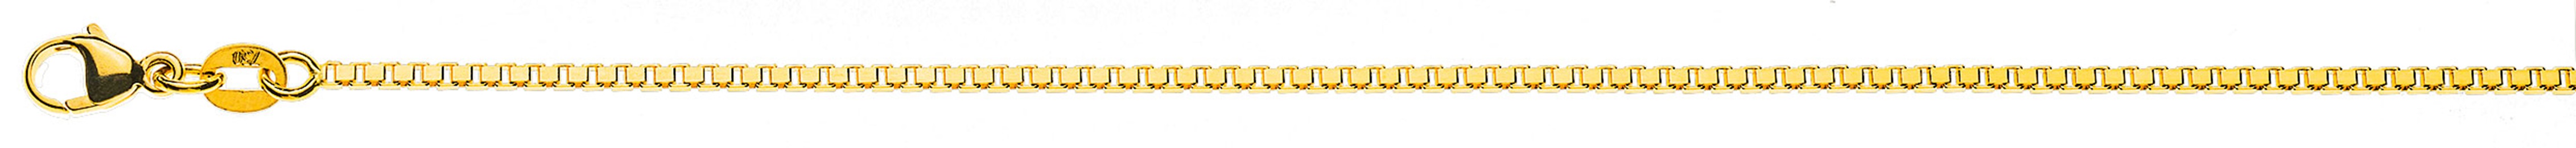 AURONOS Prestige Necklace yellow gold 18K Venetian chain diamond 42cm 1.4mm